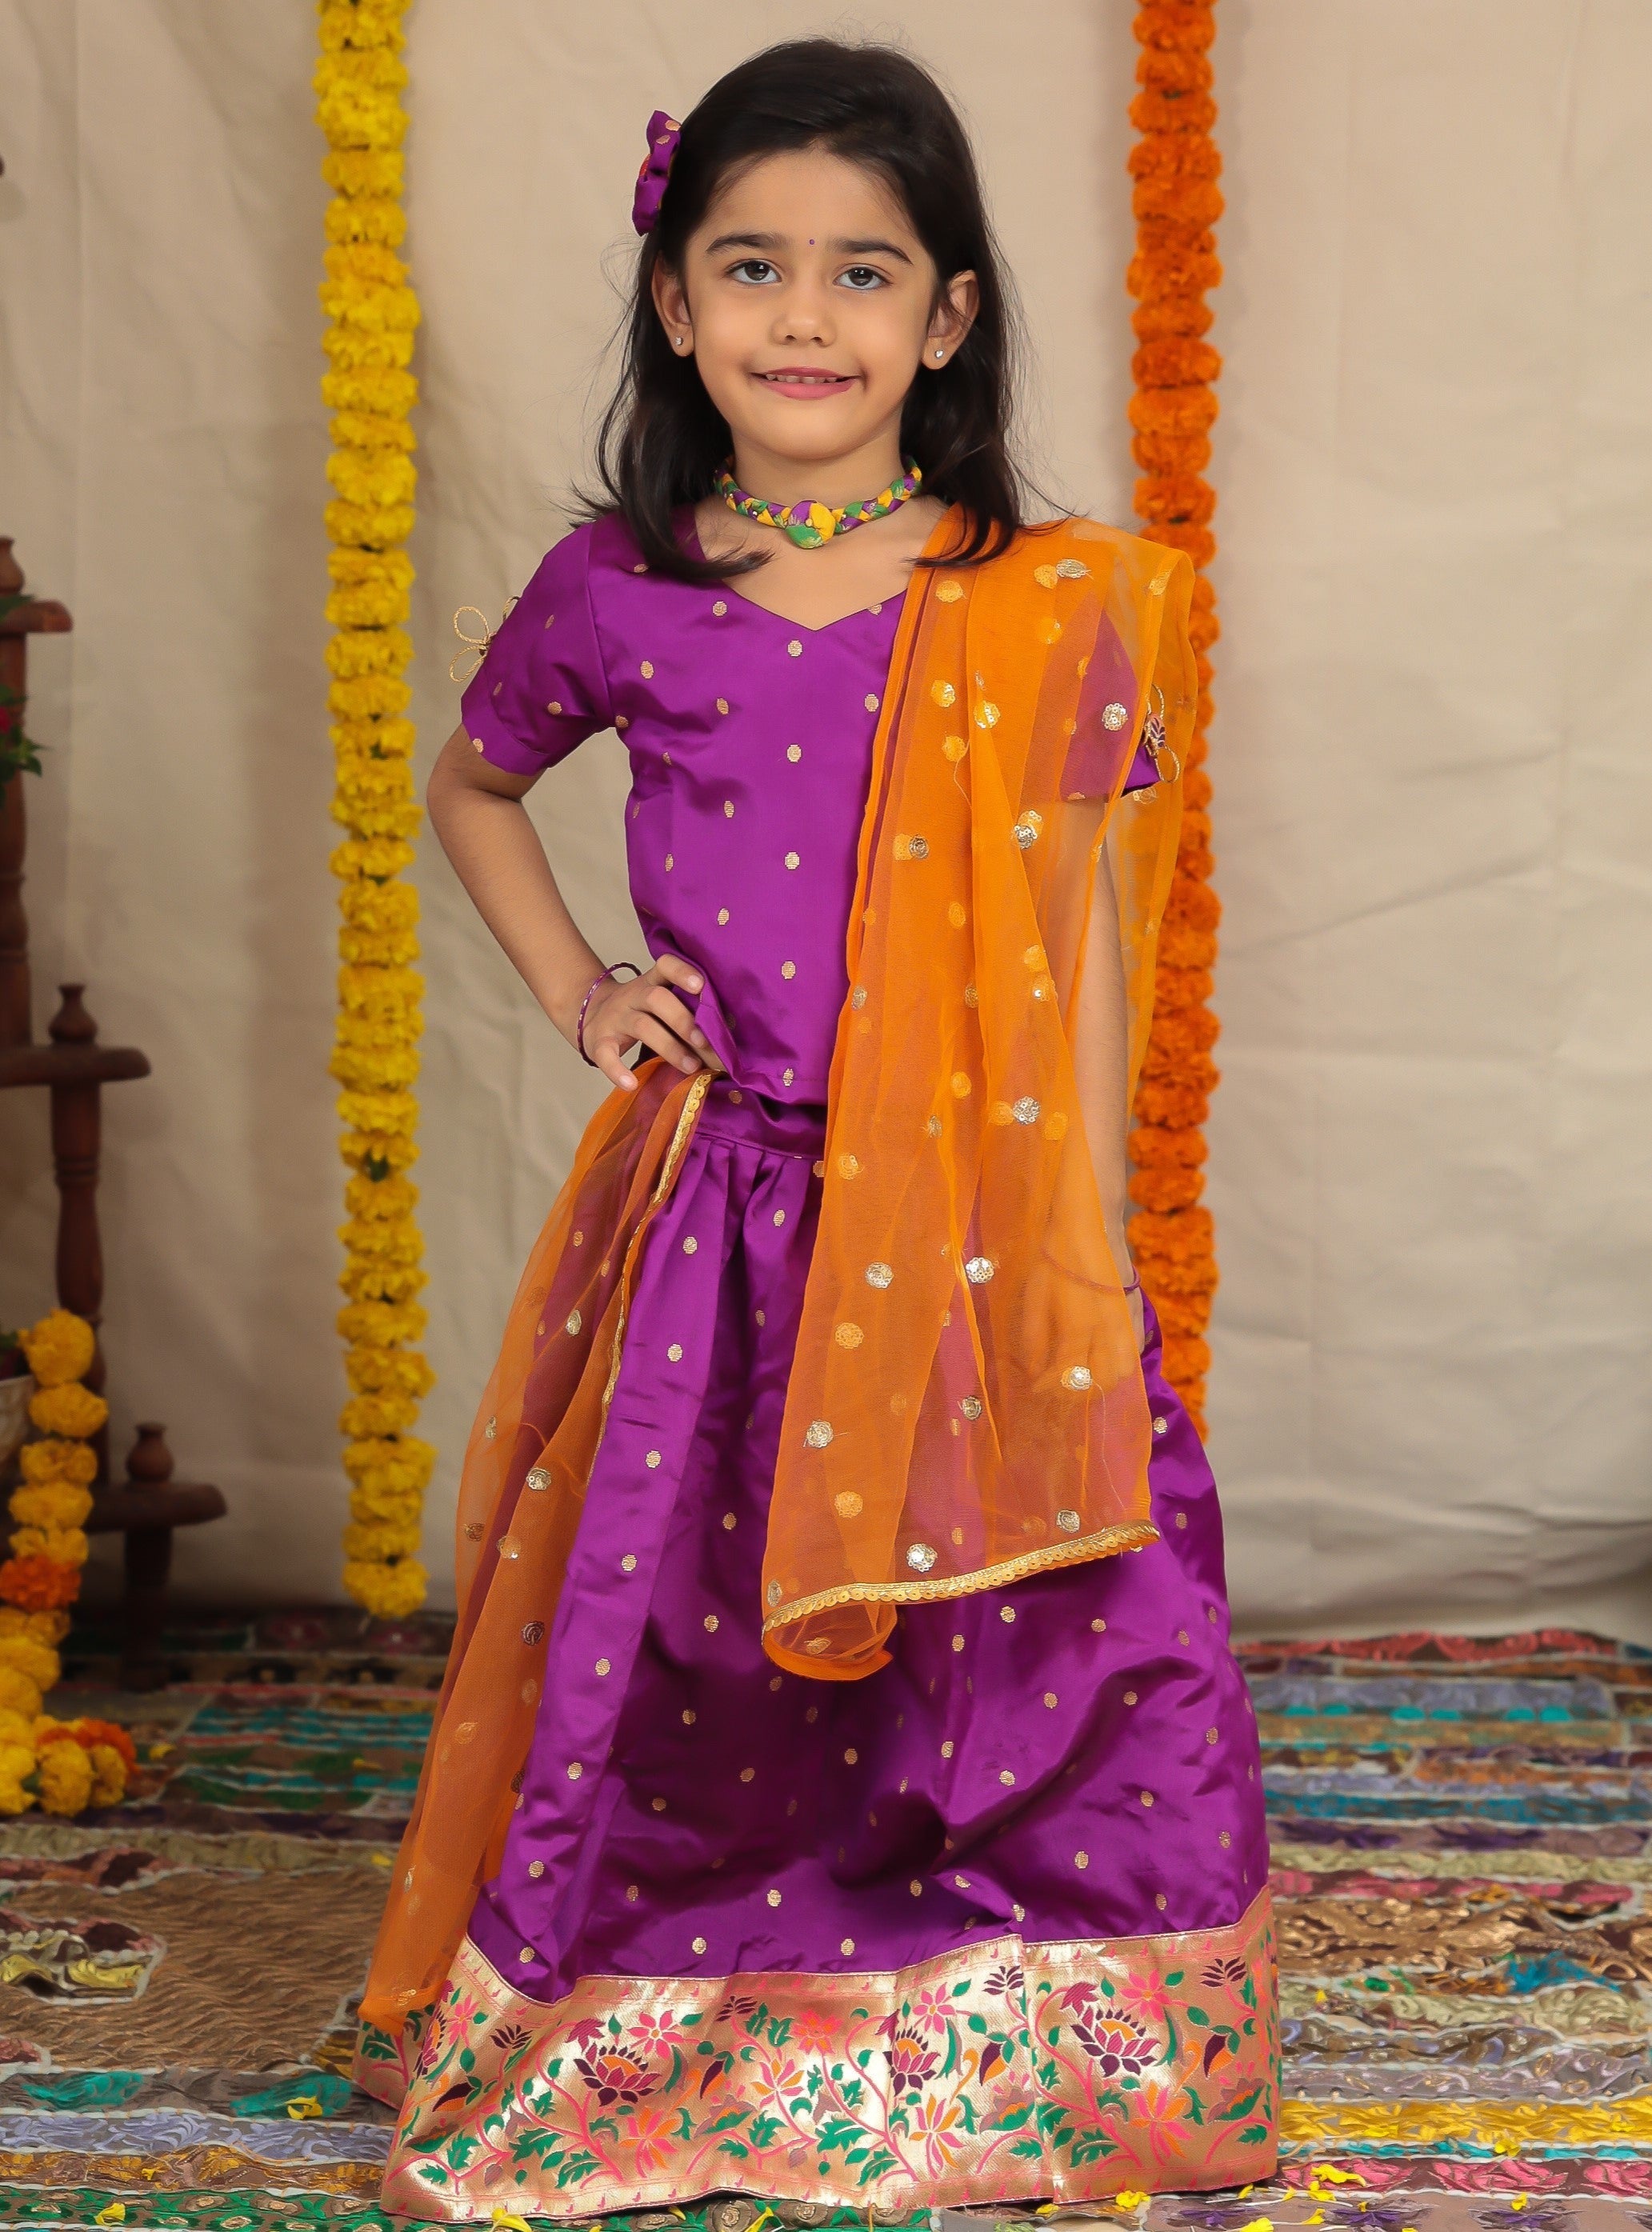 Embroidered Lehenga Choli and dupatta set for Ethnic, Wedding, Party Wear  for kids, baby and Girls., Children Lehenga, किड्स लहंगा - Necxy, Noida |  ID: 2852452187497